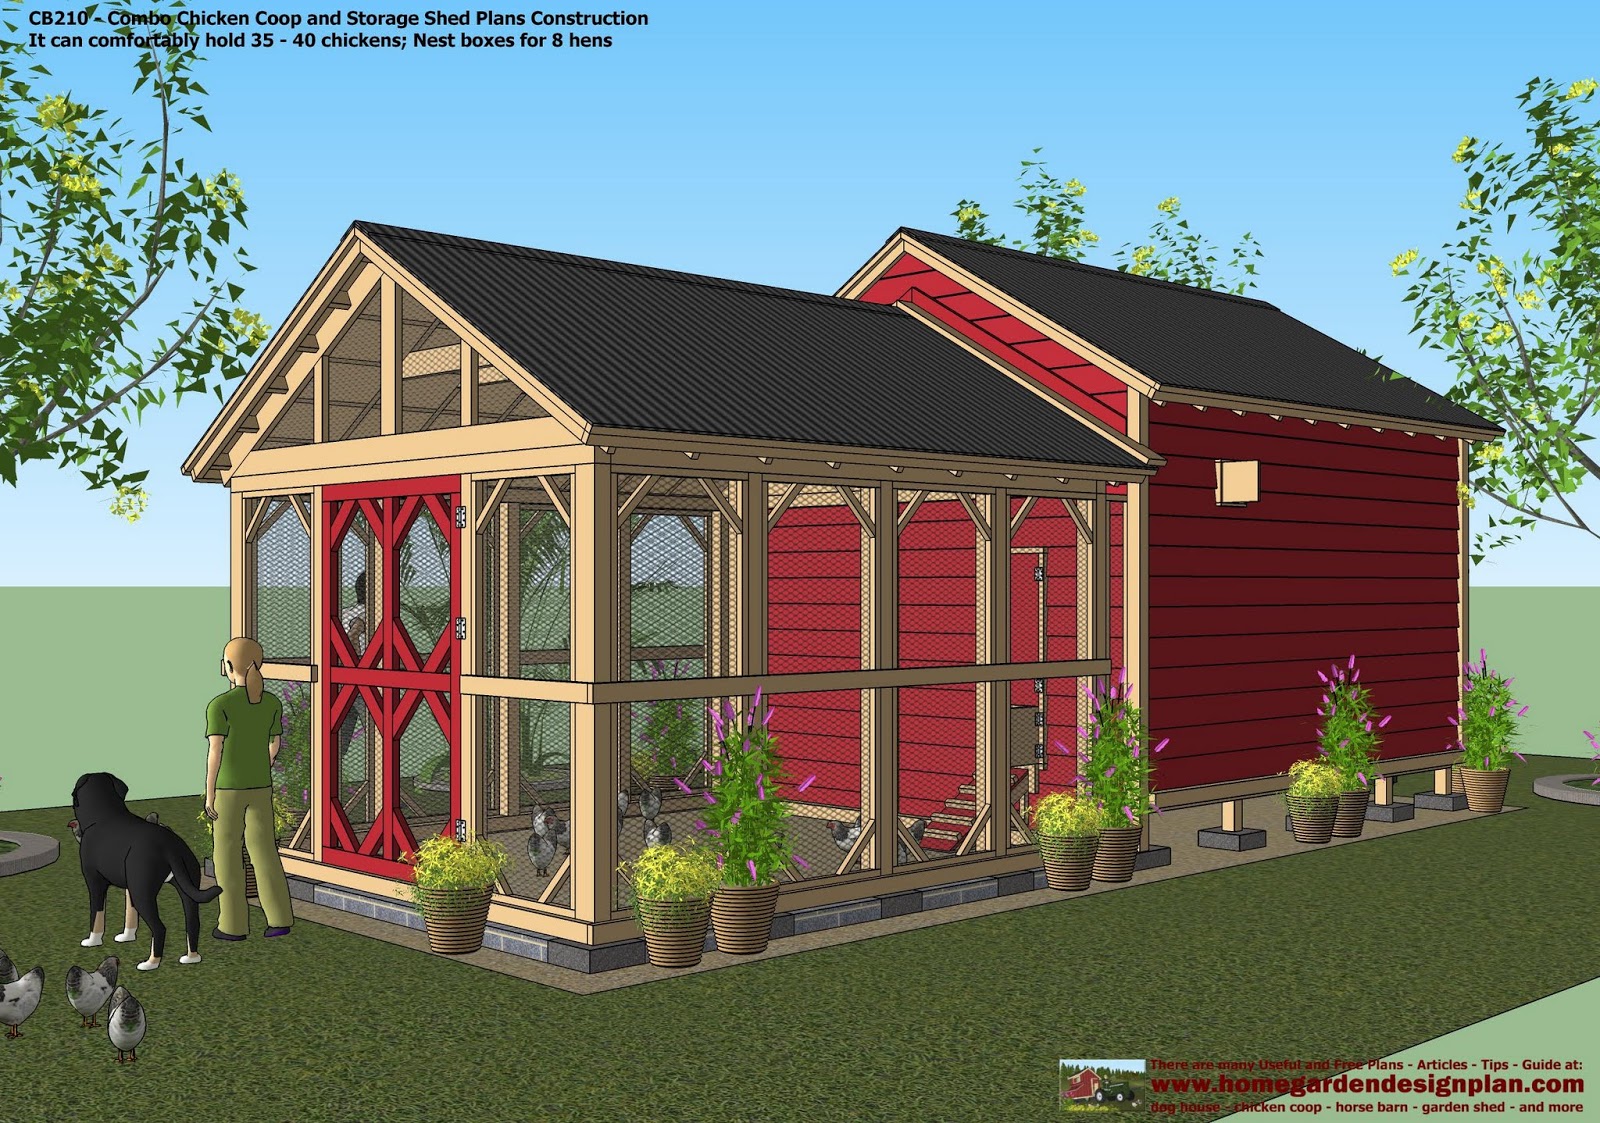 home garden plans: cb210 - combo plans - chicken coop